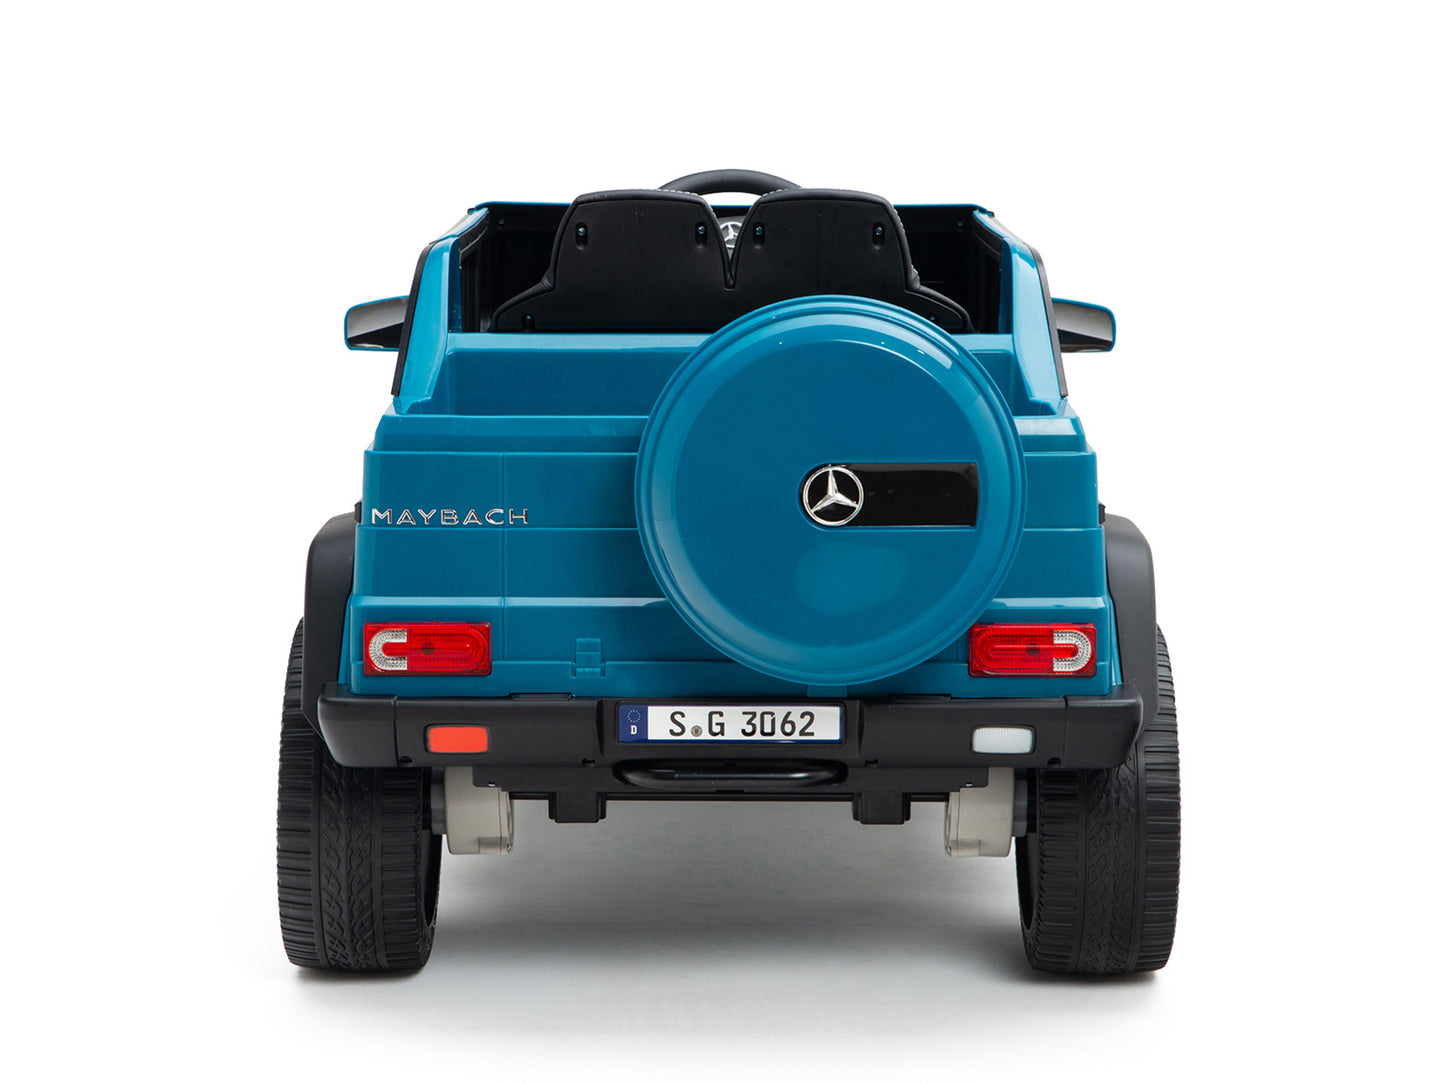 12V Mercedes-Maybach G650 Landaulet Kids Ride On Car/SUV with Remote - Blue